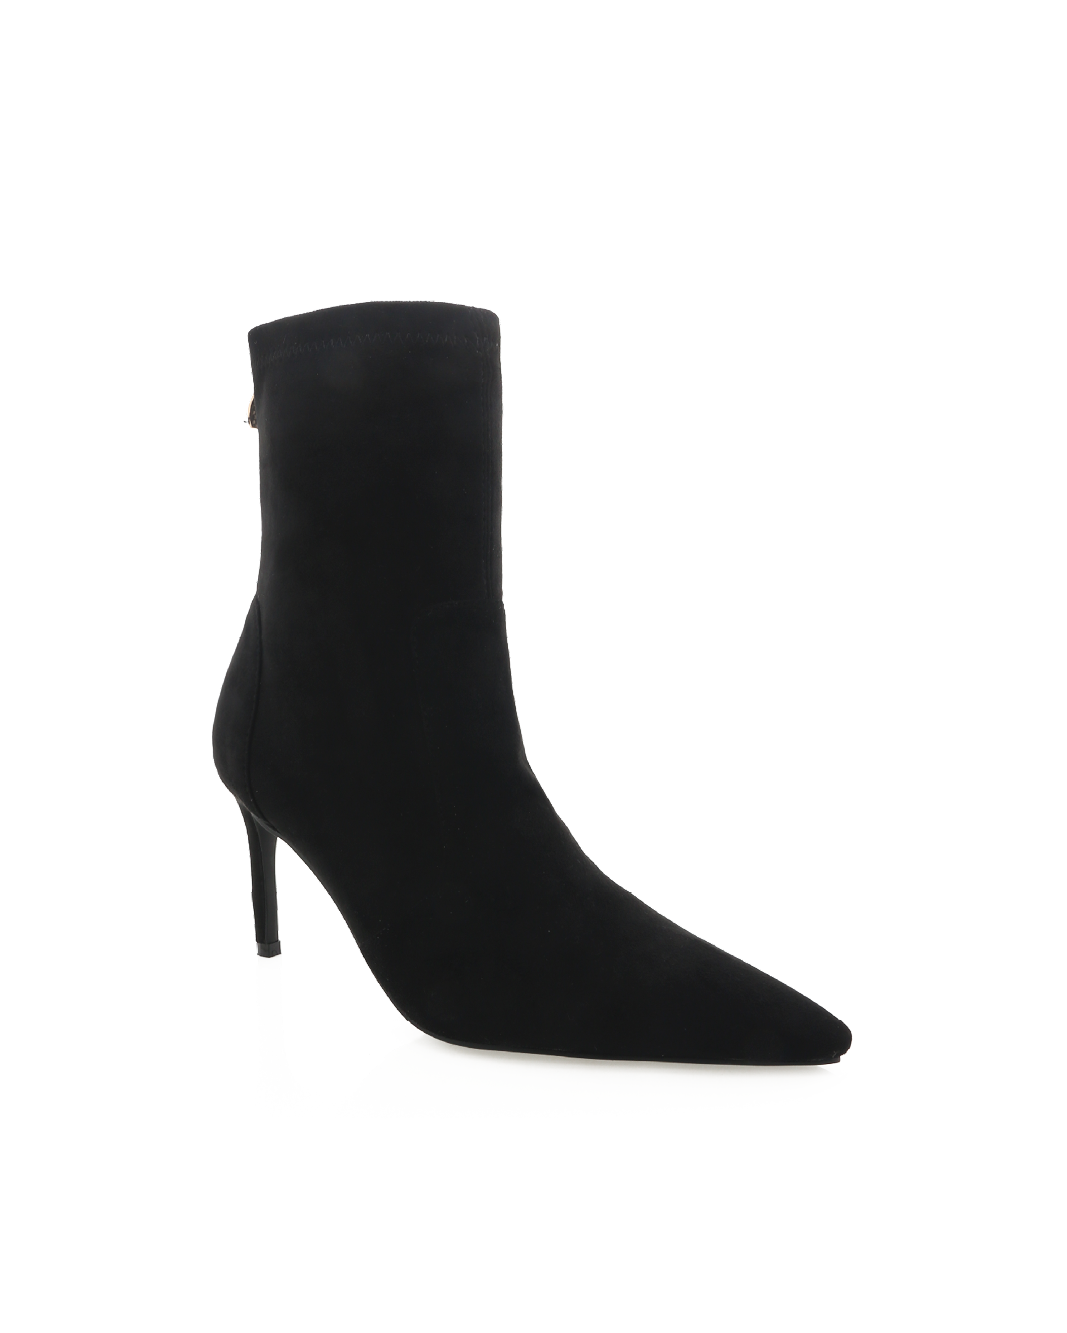 RACHAEL - BLACK SUEDE-Boots-Billini-Billini